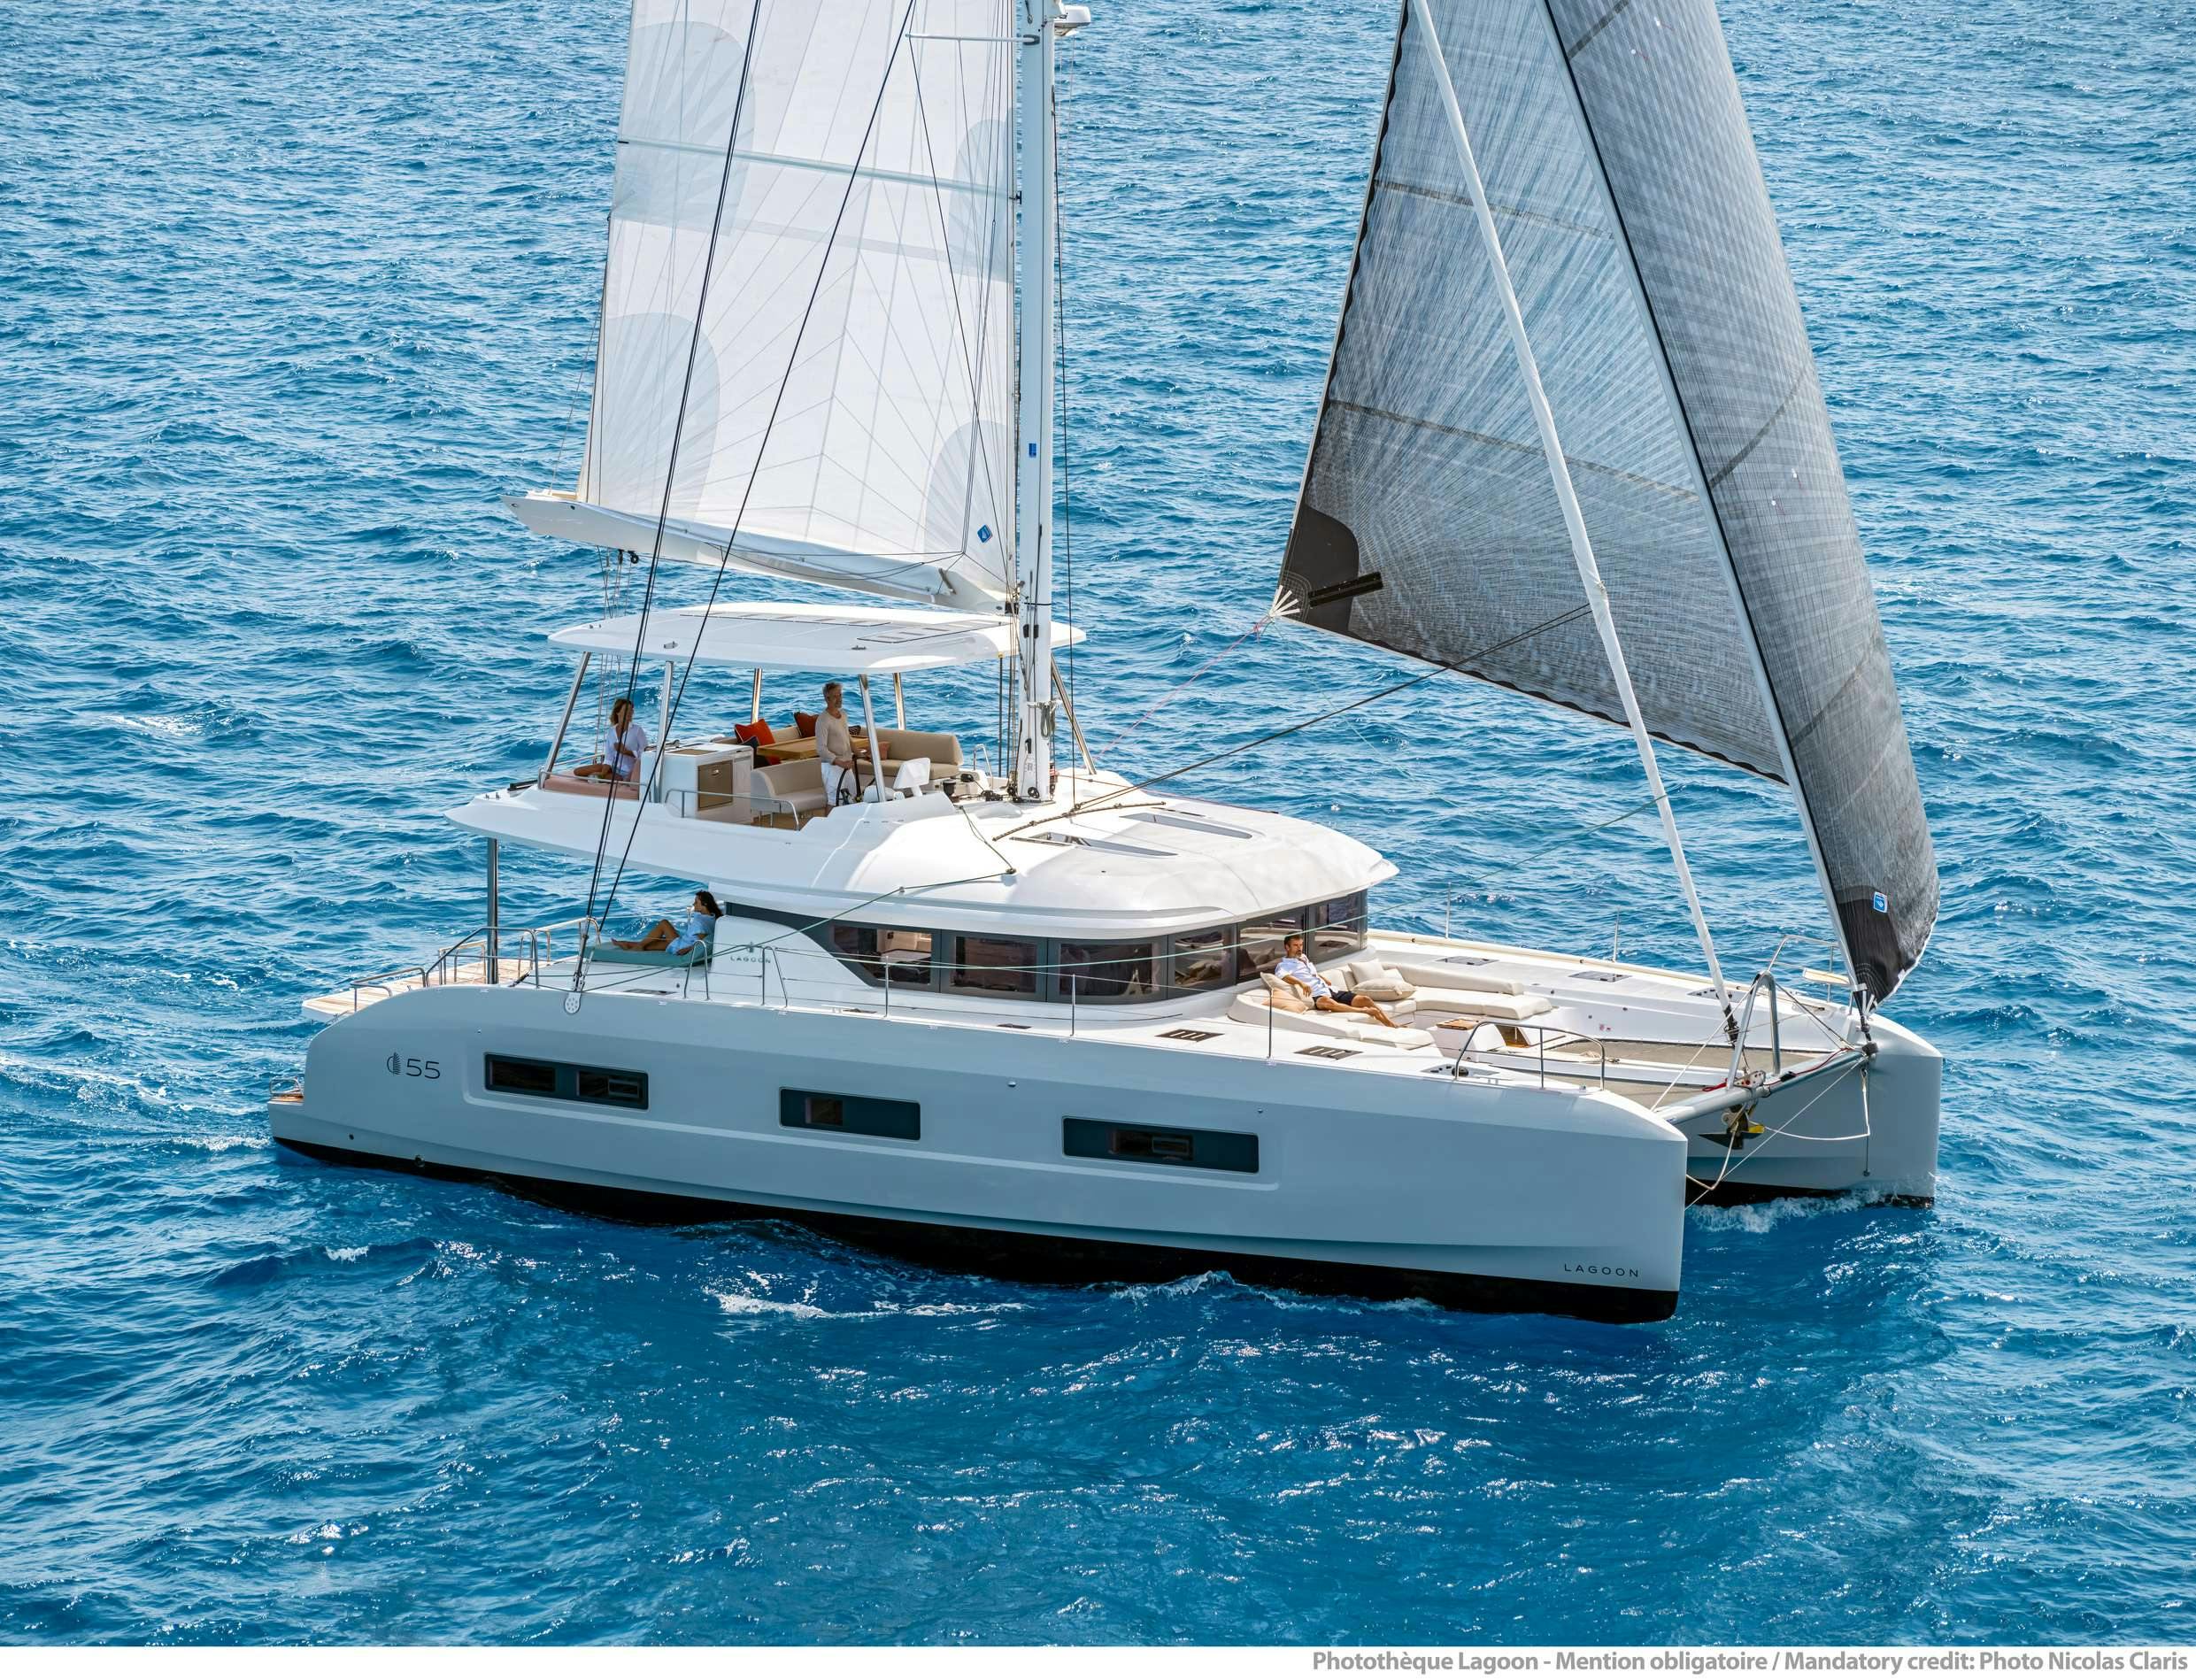 VALIUM 55 - Yacht Charter Kalamata & Boat hire in Greece 1